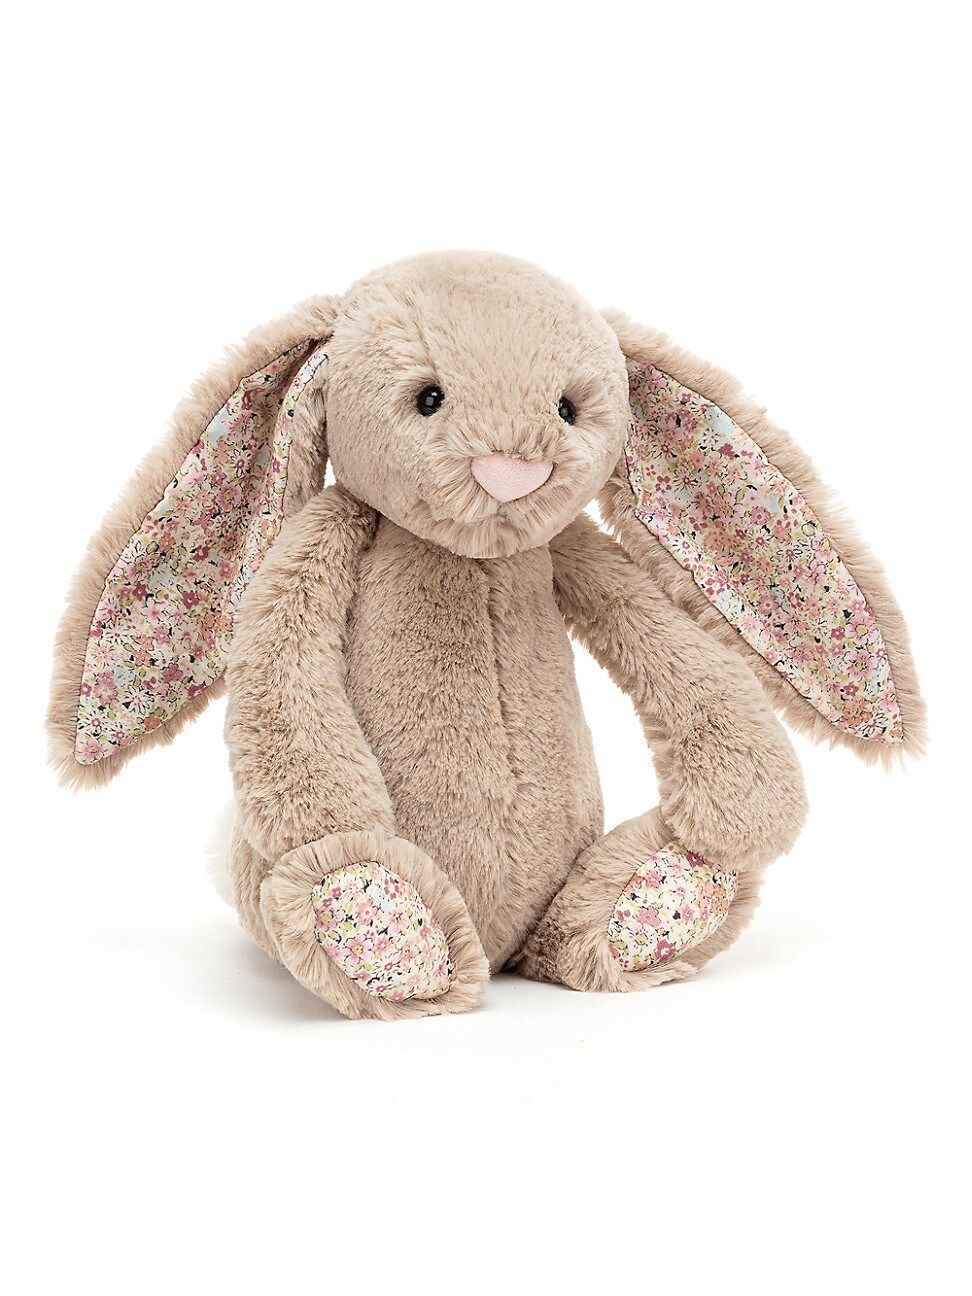 Blossom Bea Bunny Plush Toy - Beige | Saks Fifth Avenue